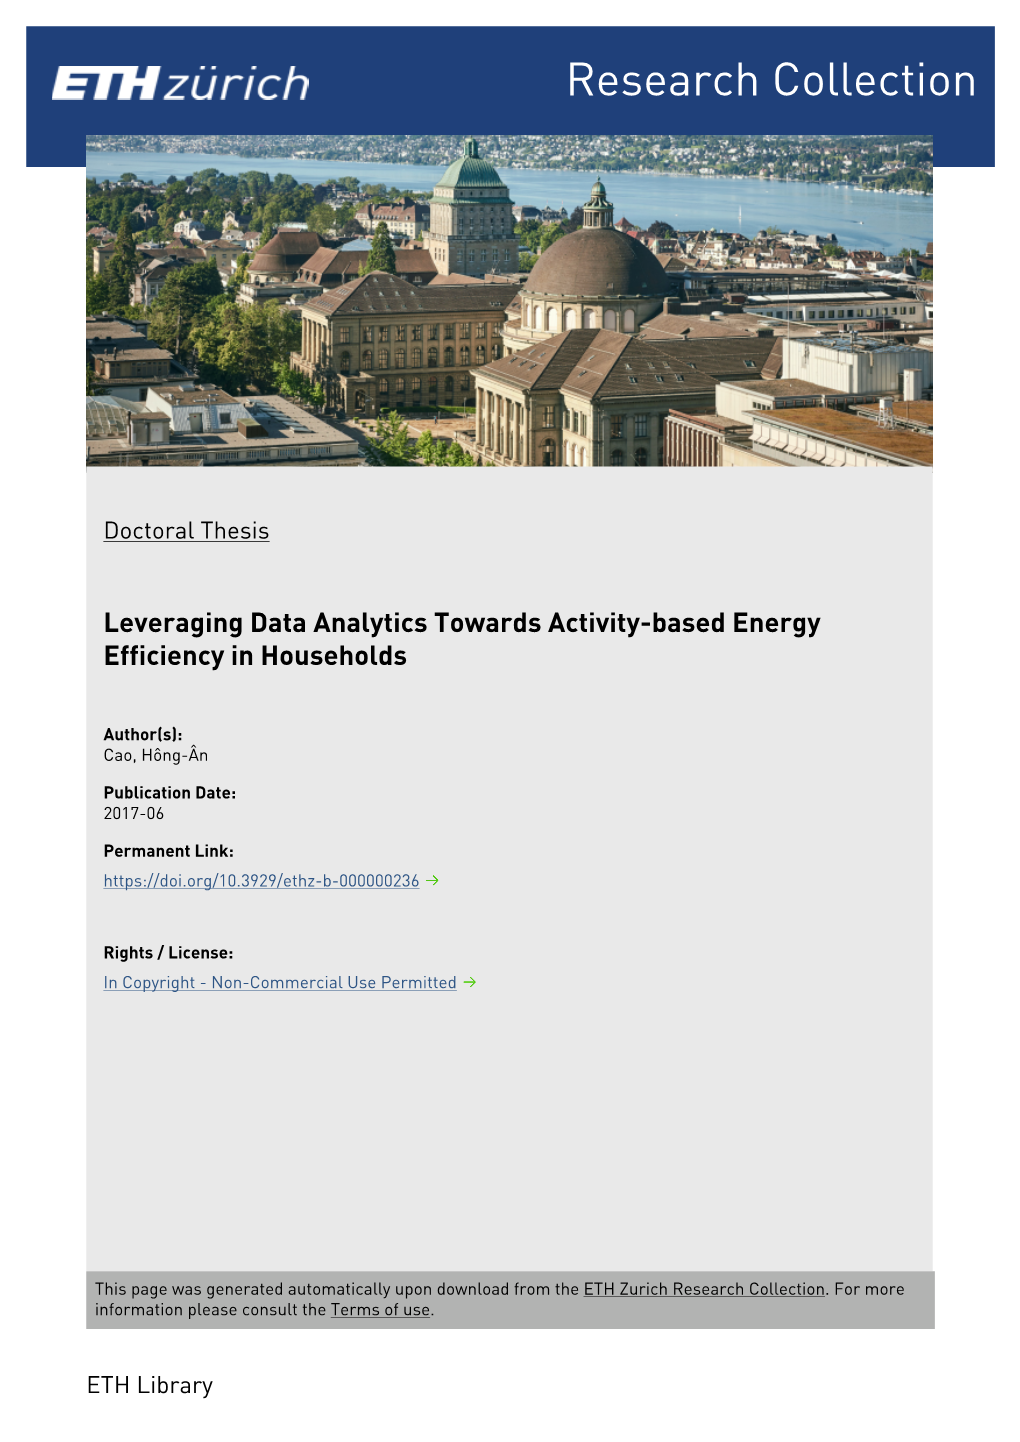 Leveraging Data Analytics Towards Activity-Based Energy Efficiency in Households